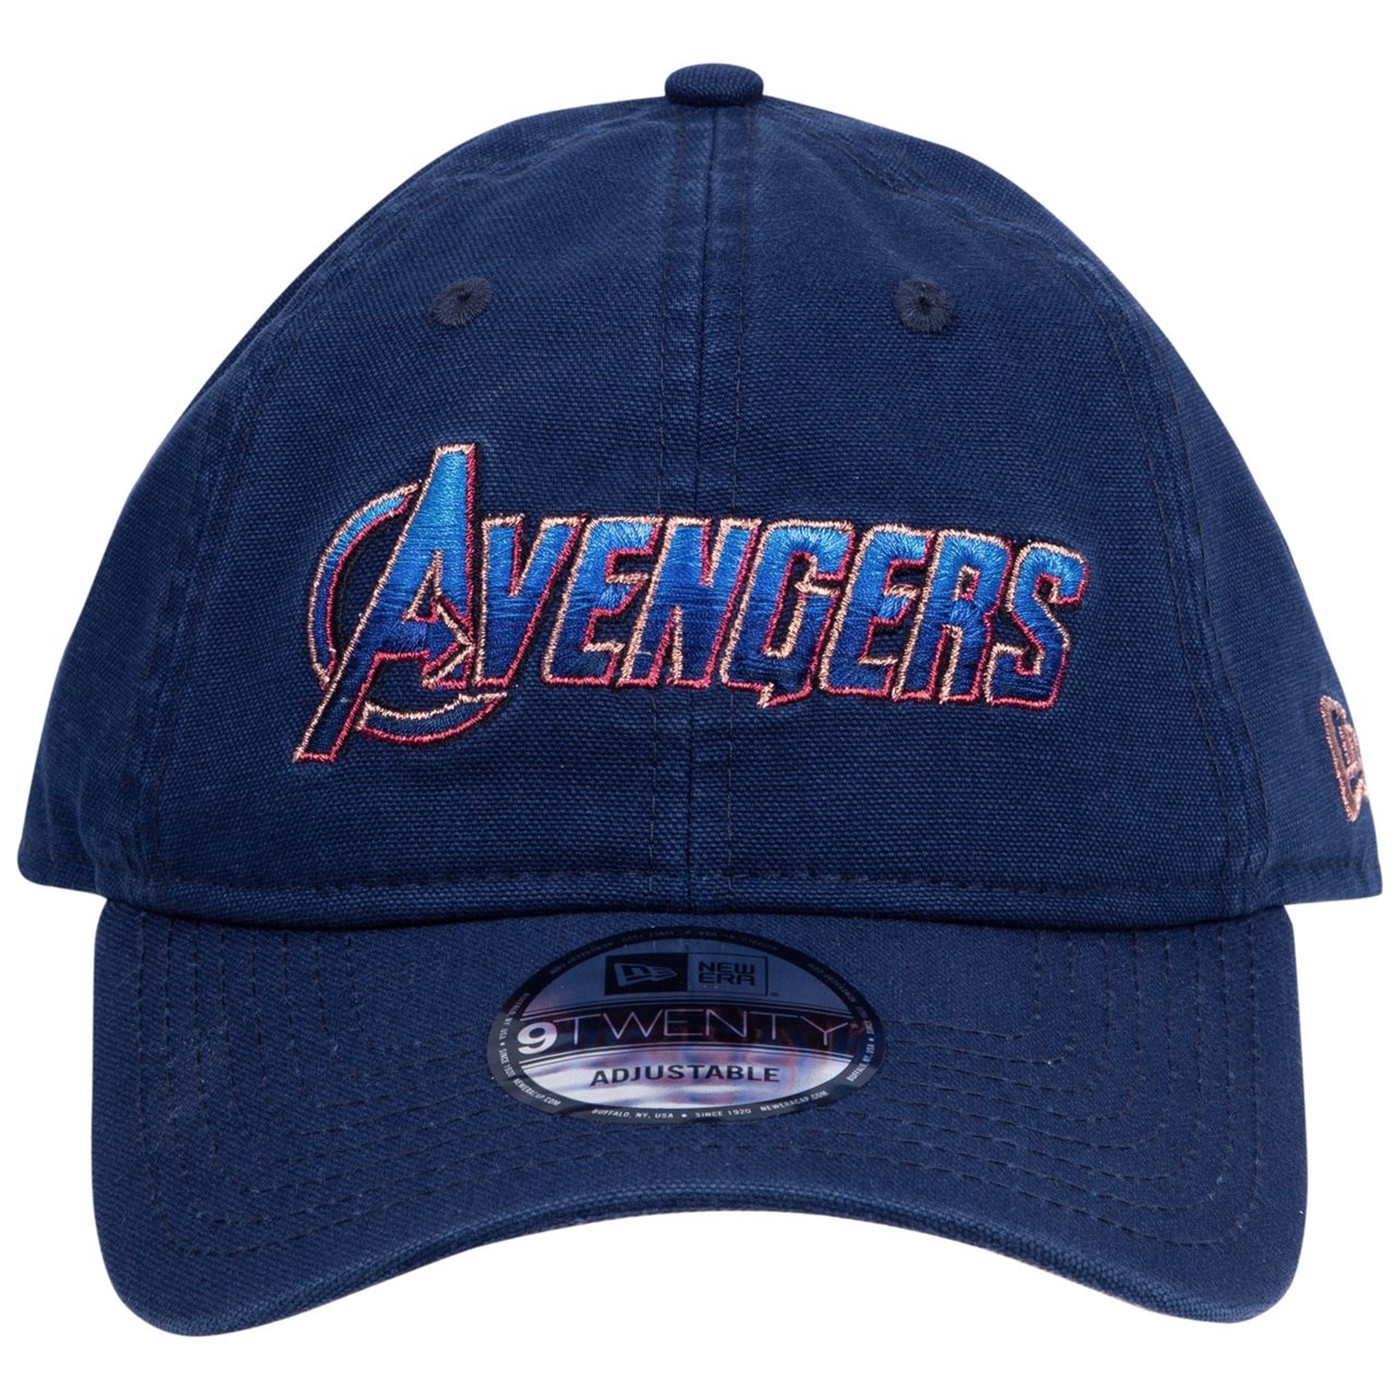 Avengers Endgame Movie Title 9Twenty Adjustable Hat